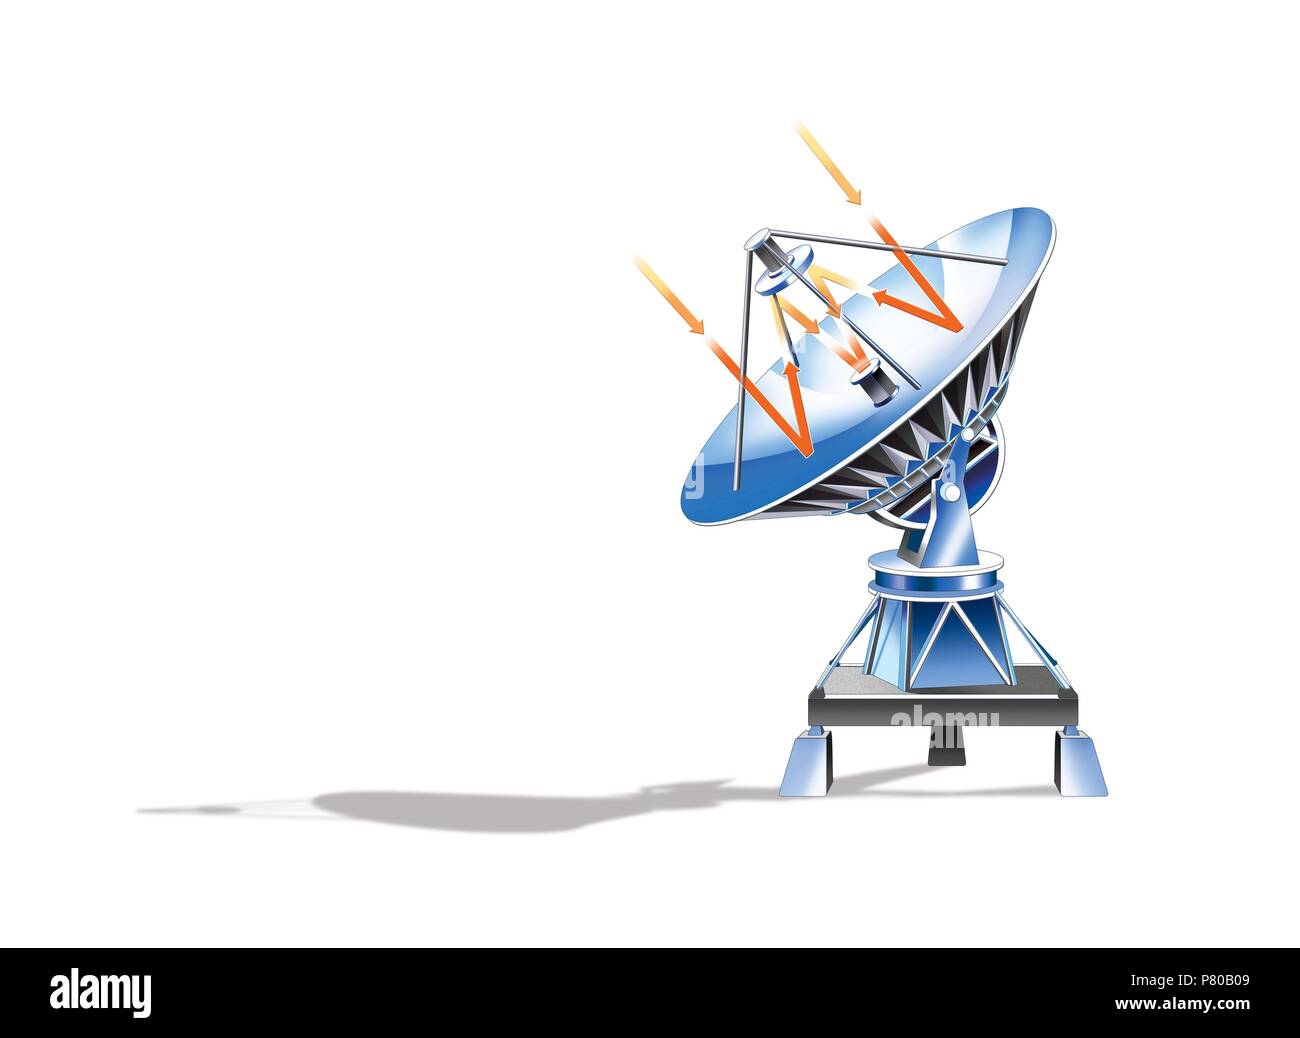 Radioteleskop mit Parabolantenne. Stockfoto